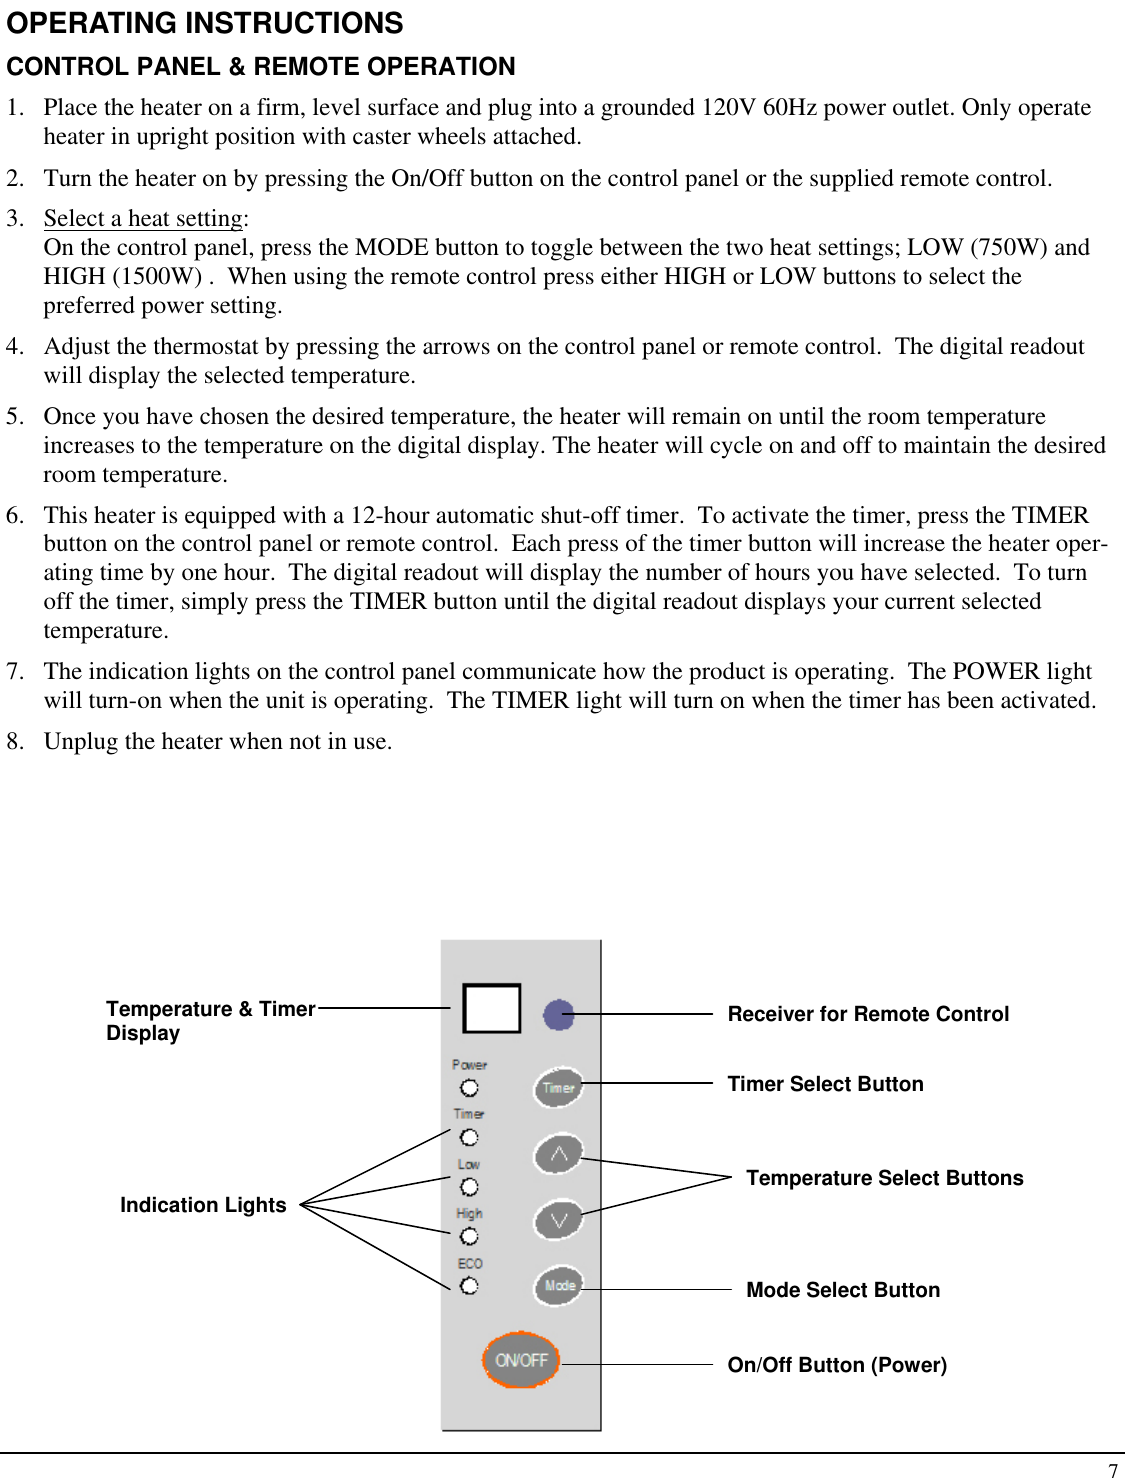 Page 7 of 10 - Soleus-Air Soleus-Air-360-Micathermic-Heater-W-Remote-Hm5-15R-32-Users-Manual- HM5-15R-32 Manual 07-10-07  Soleus-air-360-micathermic-heater-w-remote-hm5-15r-32-users-manual